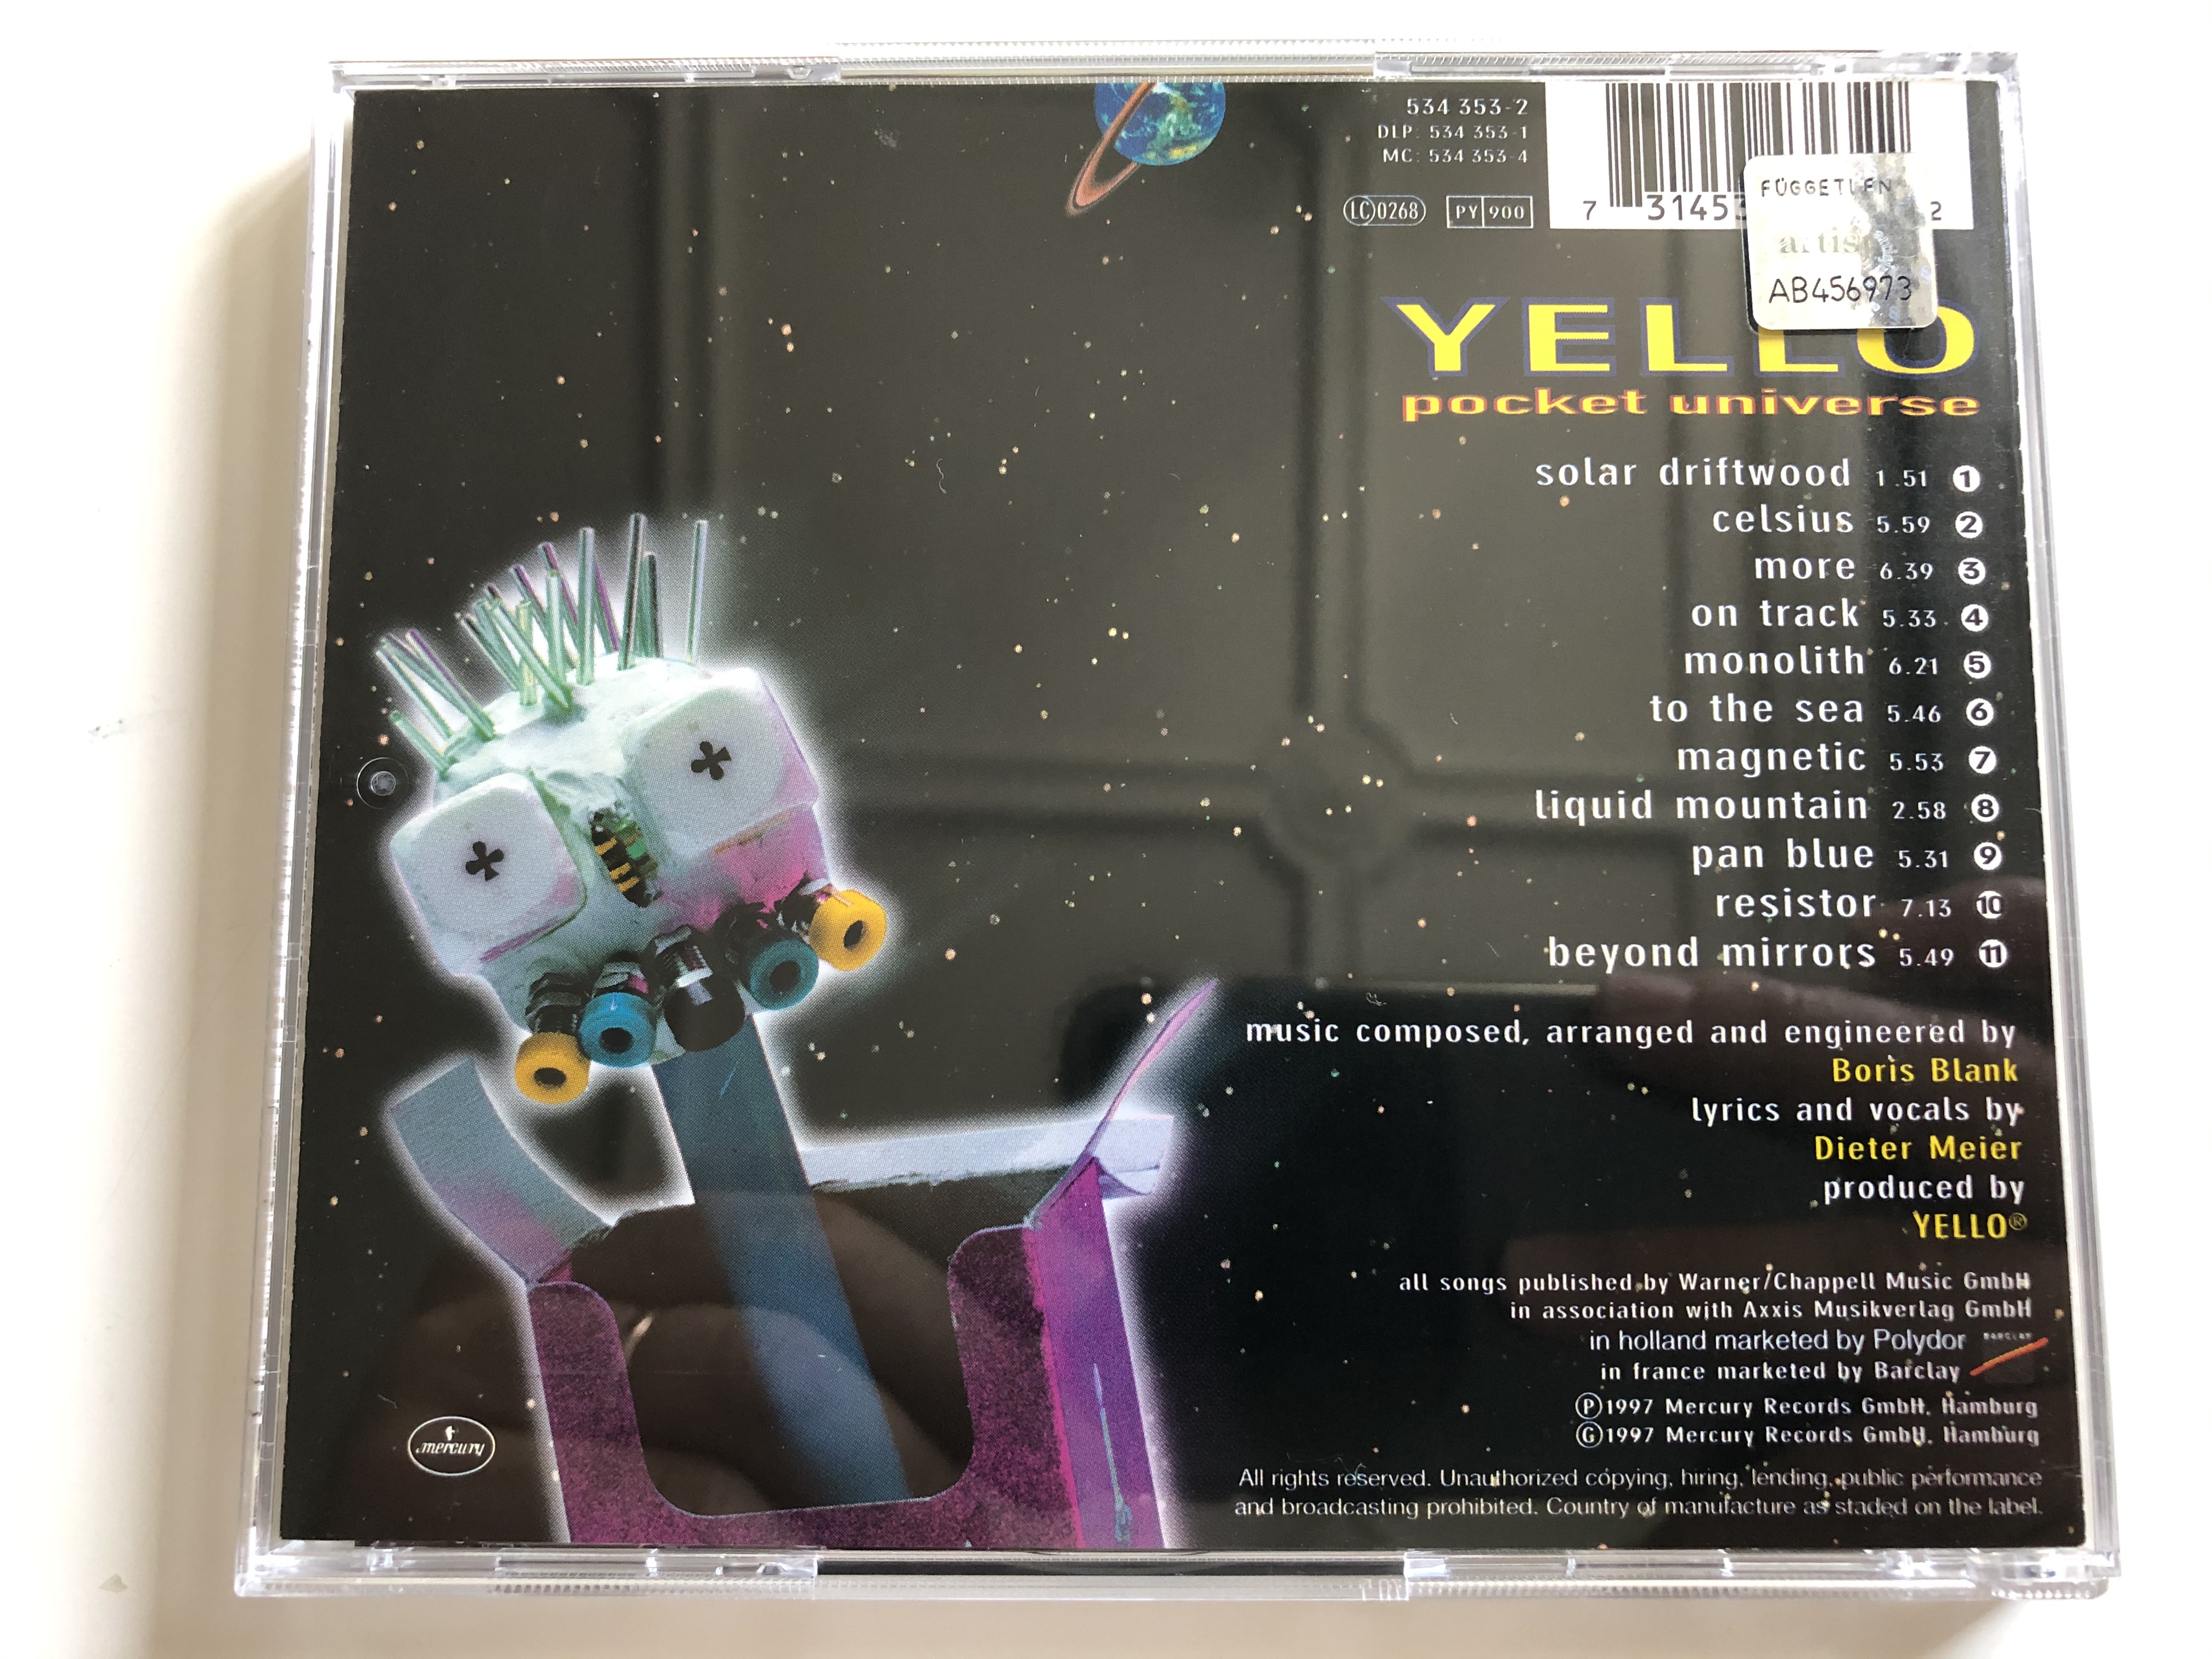 yello-pocket-universe-mercury-audio-cd-1997-534-353-2-5-.jpg